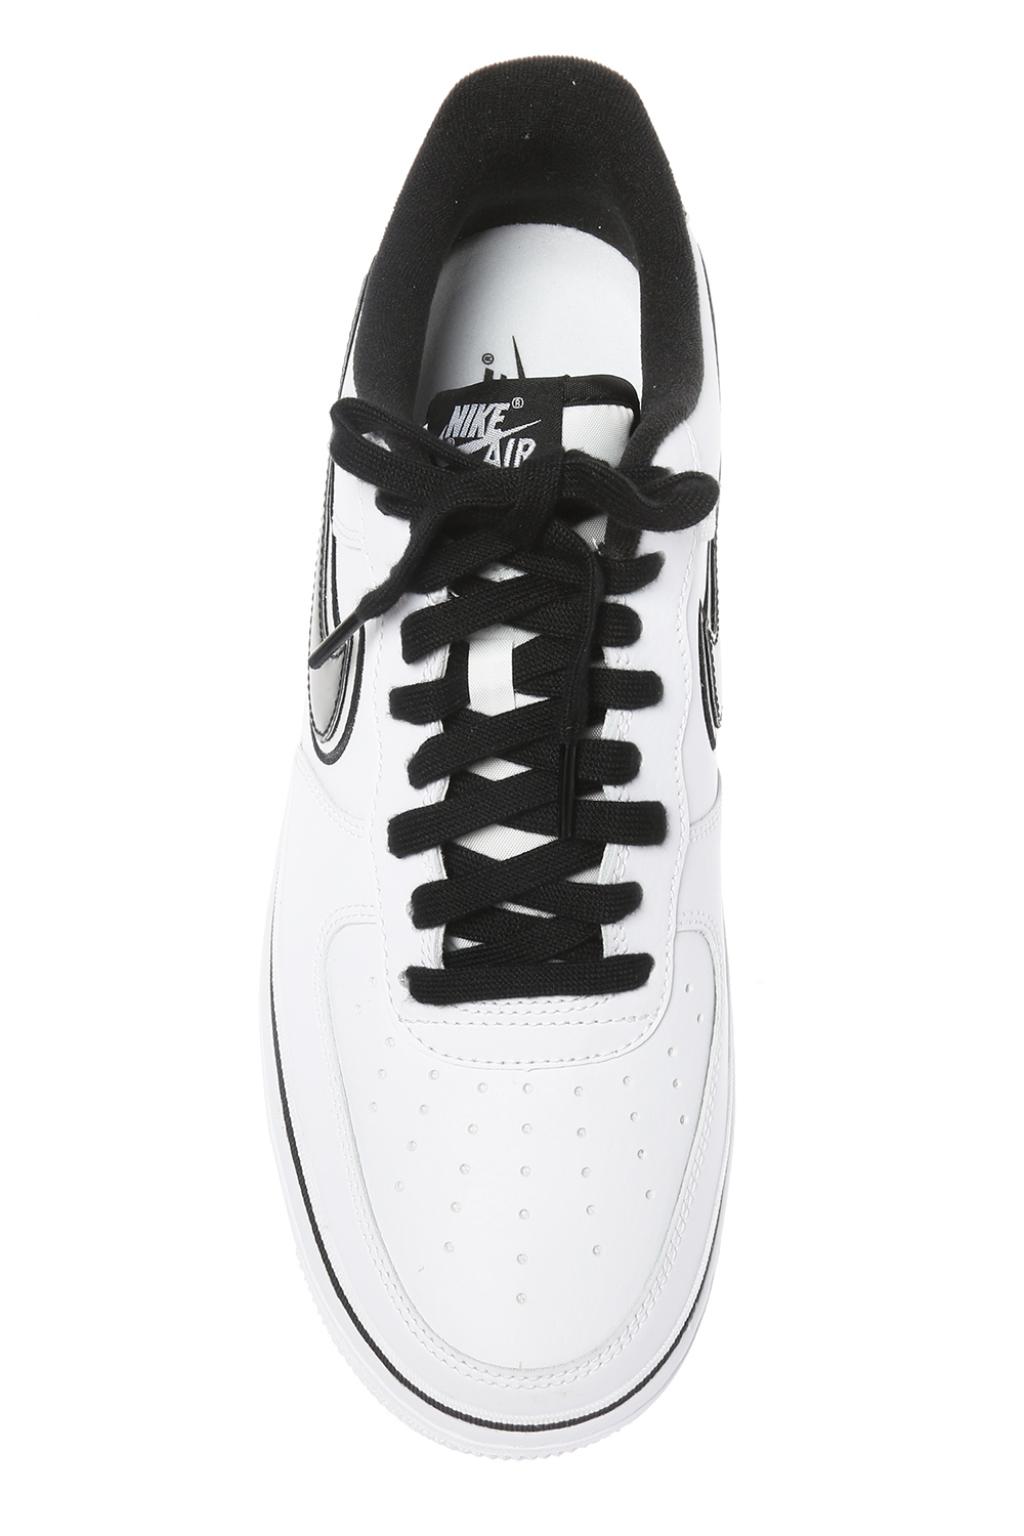 Nike Air Force 1 '07 LV8 Sport White/Black - AJ7748-100